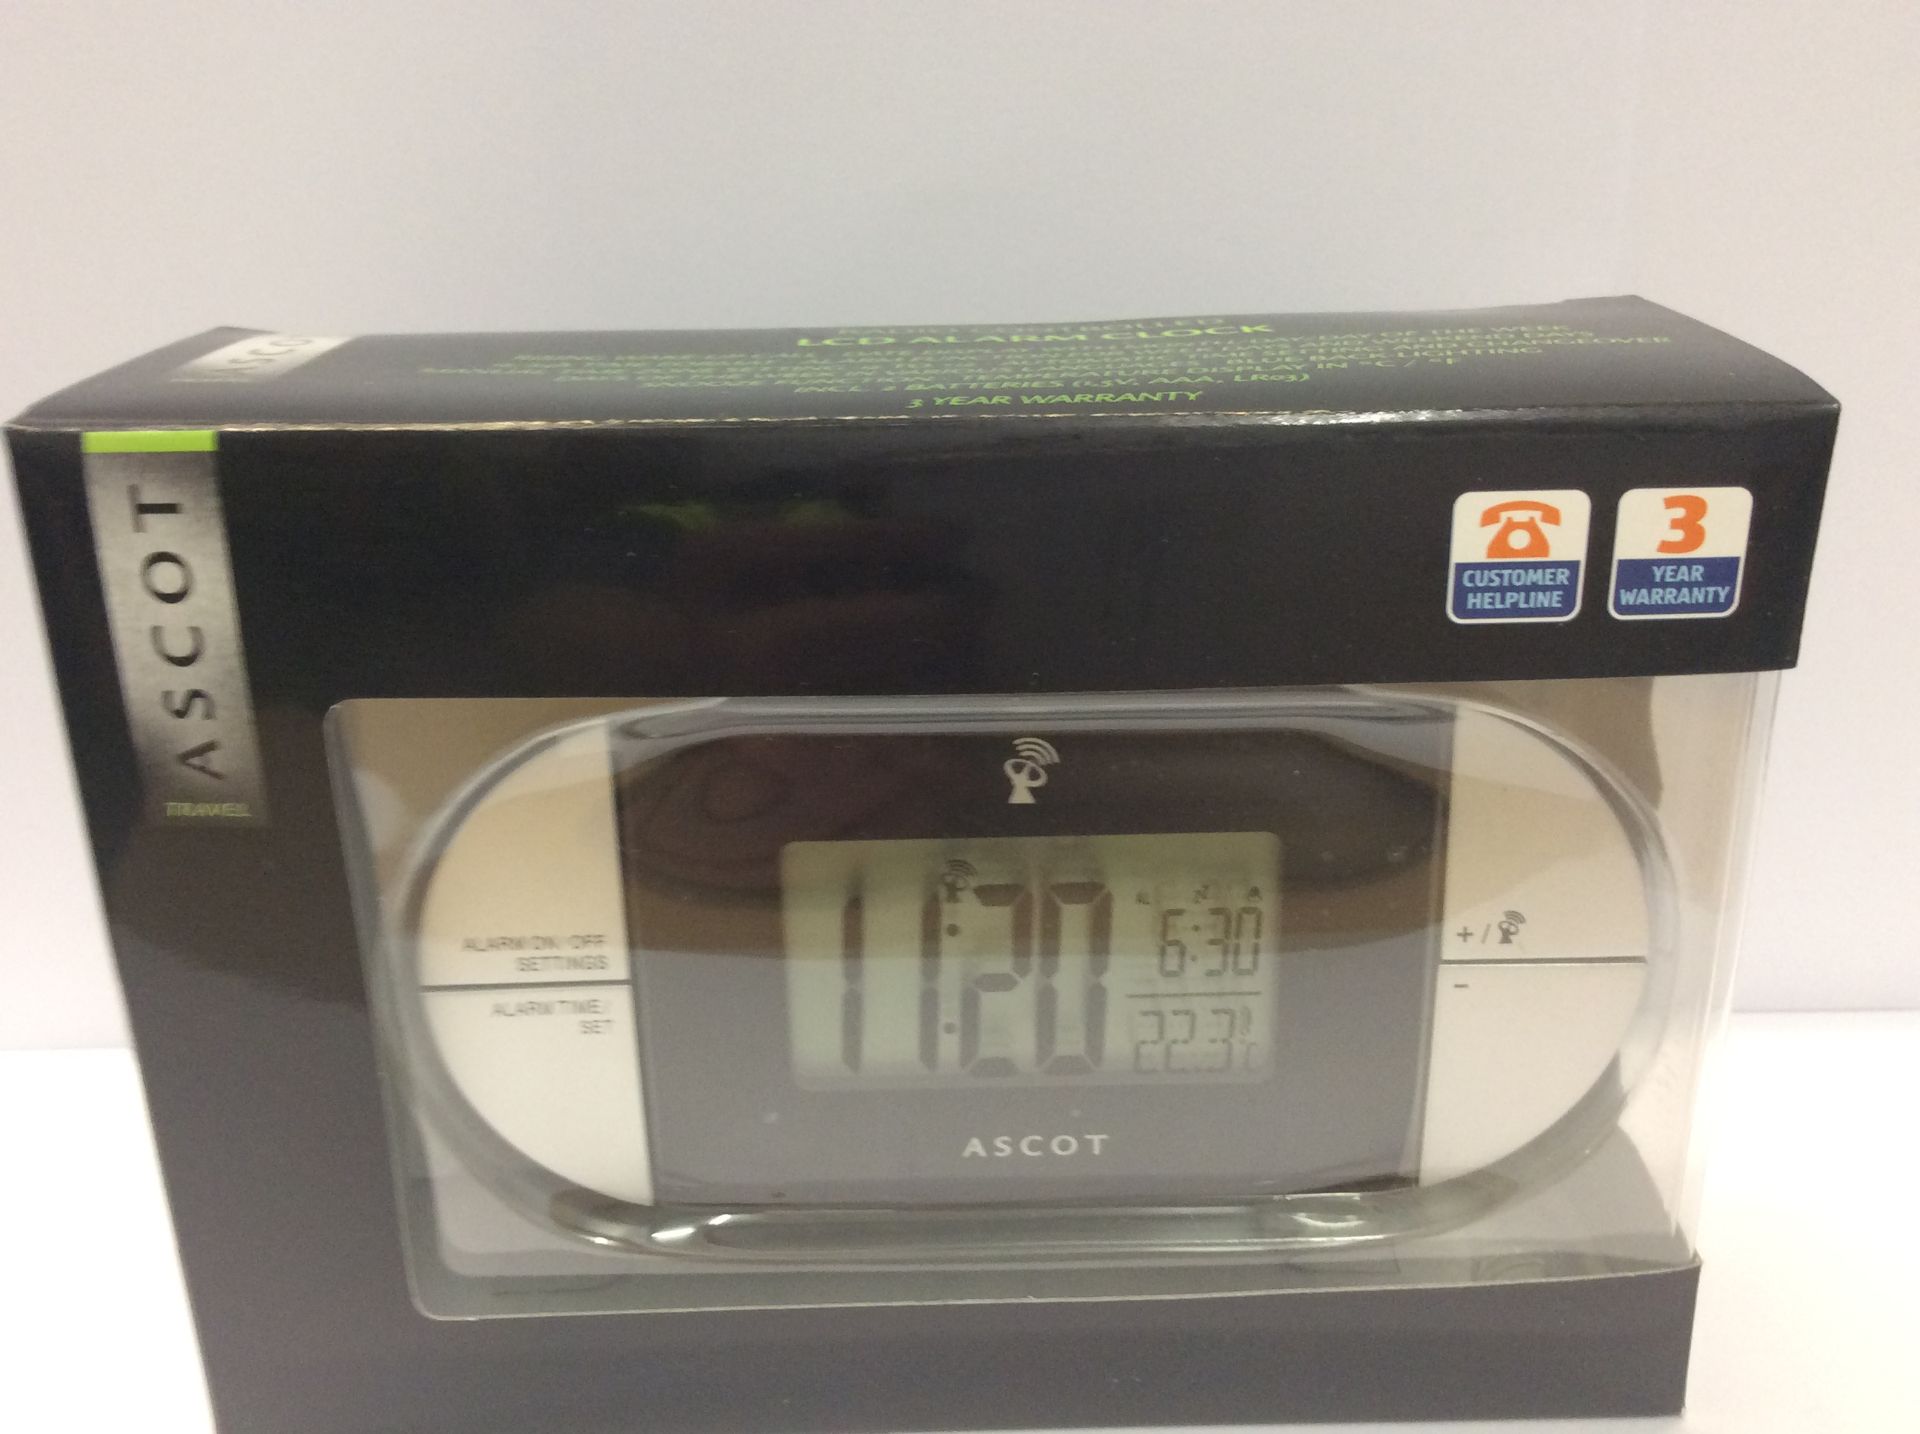 V Brand New Digital LCD Radio Controlled Alarm Clock - Image 2 of 2